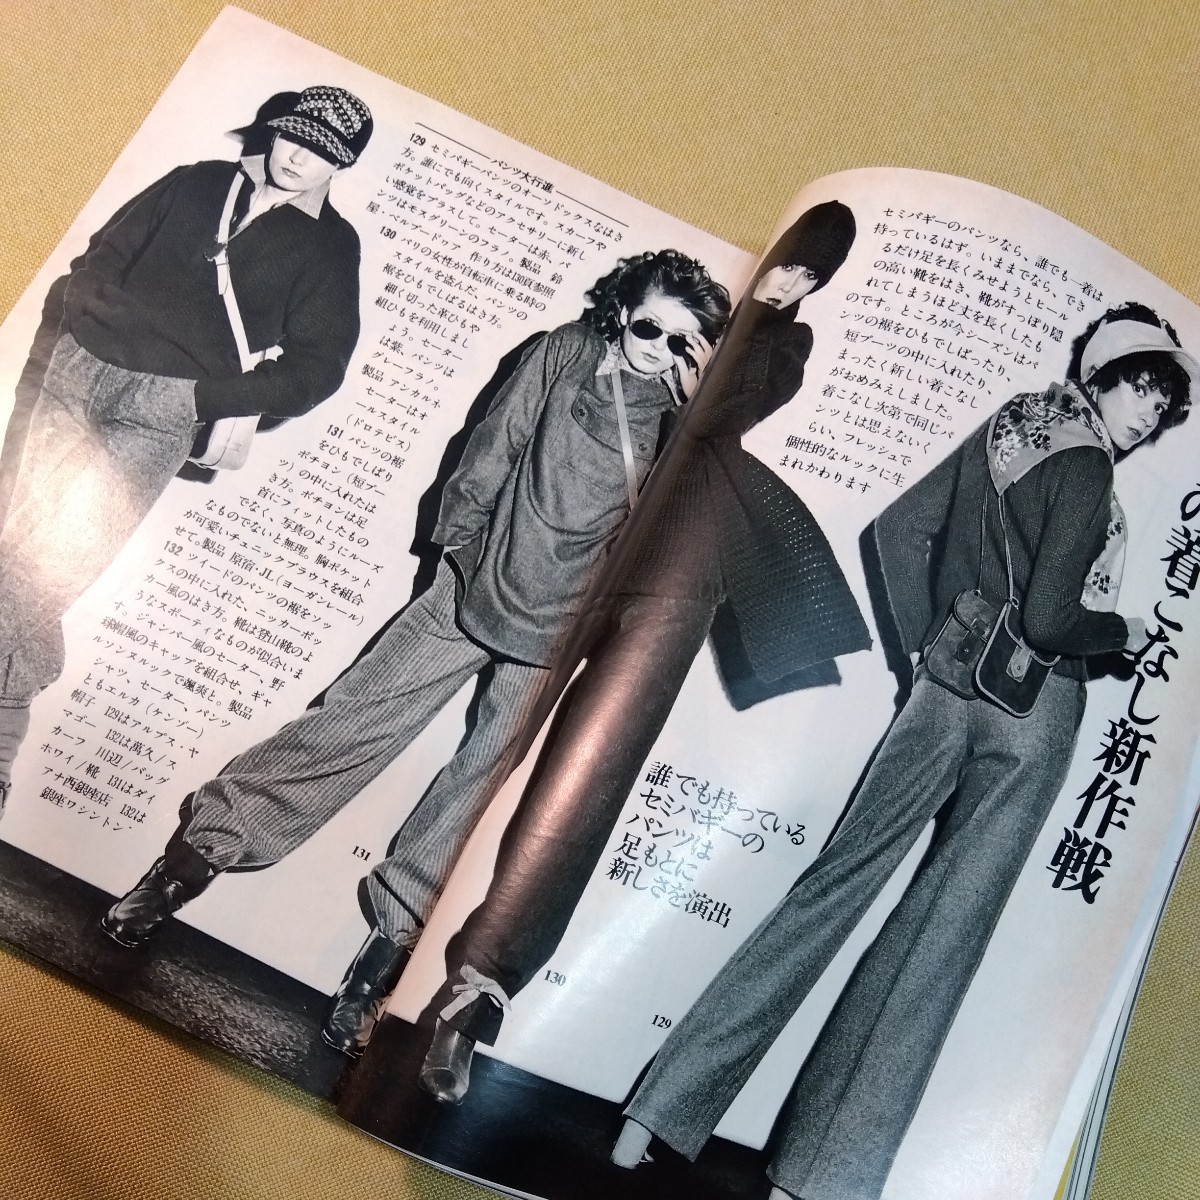  dress me- King Showa era 43 year 2 month number 1968 year with defect Showa Retro fashion magazine 